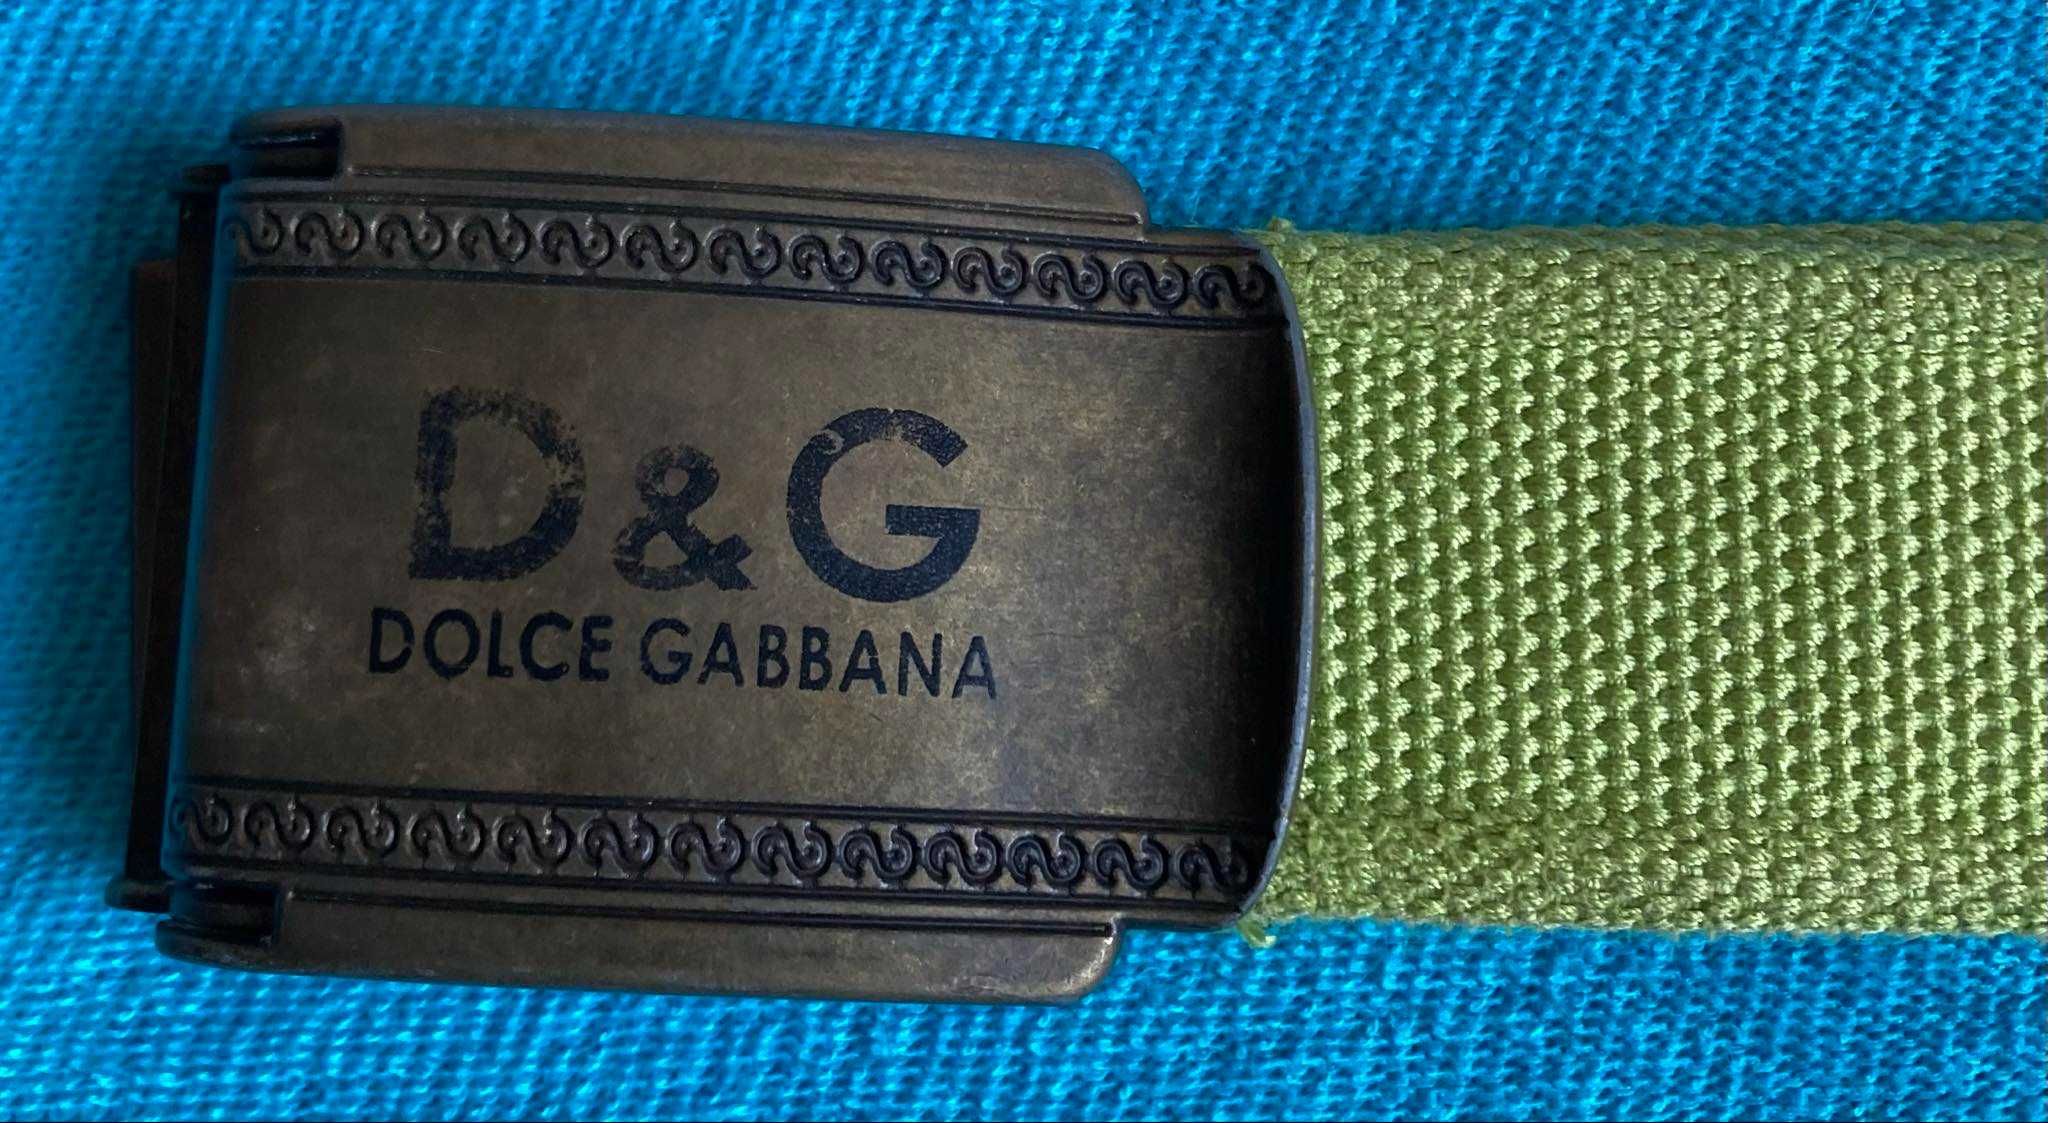 Pasek Dolce Gabbana vintage